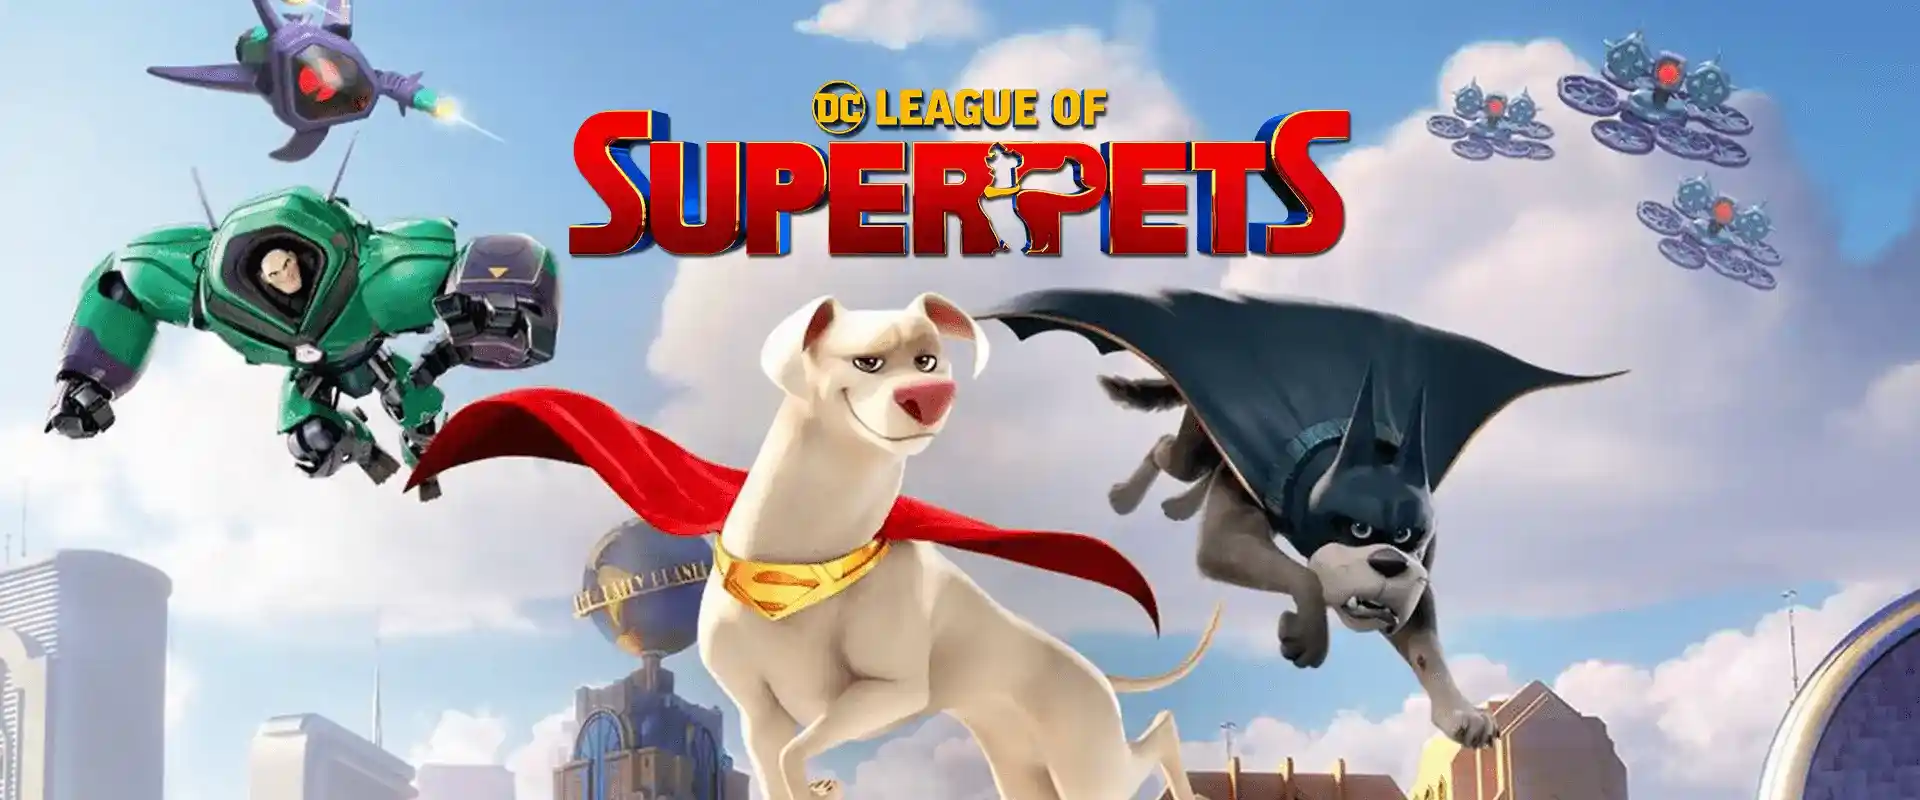 DC League of Super-Pets (2022) ขบวนการซูเปอร์เพ็ทส์ desktop - Movie777